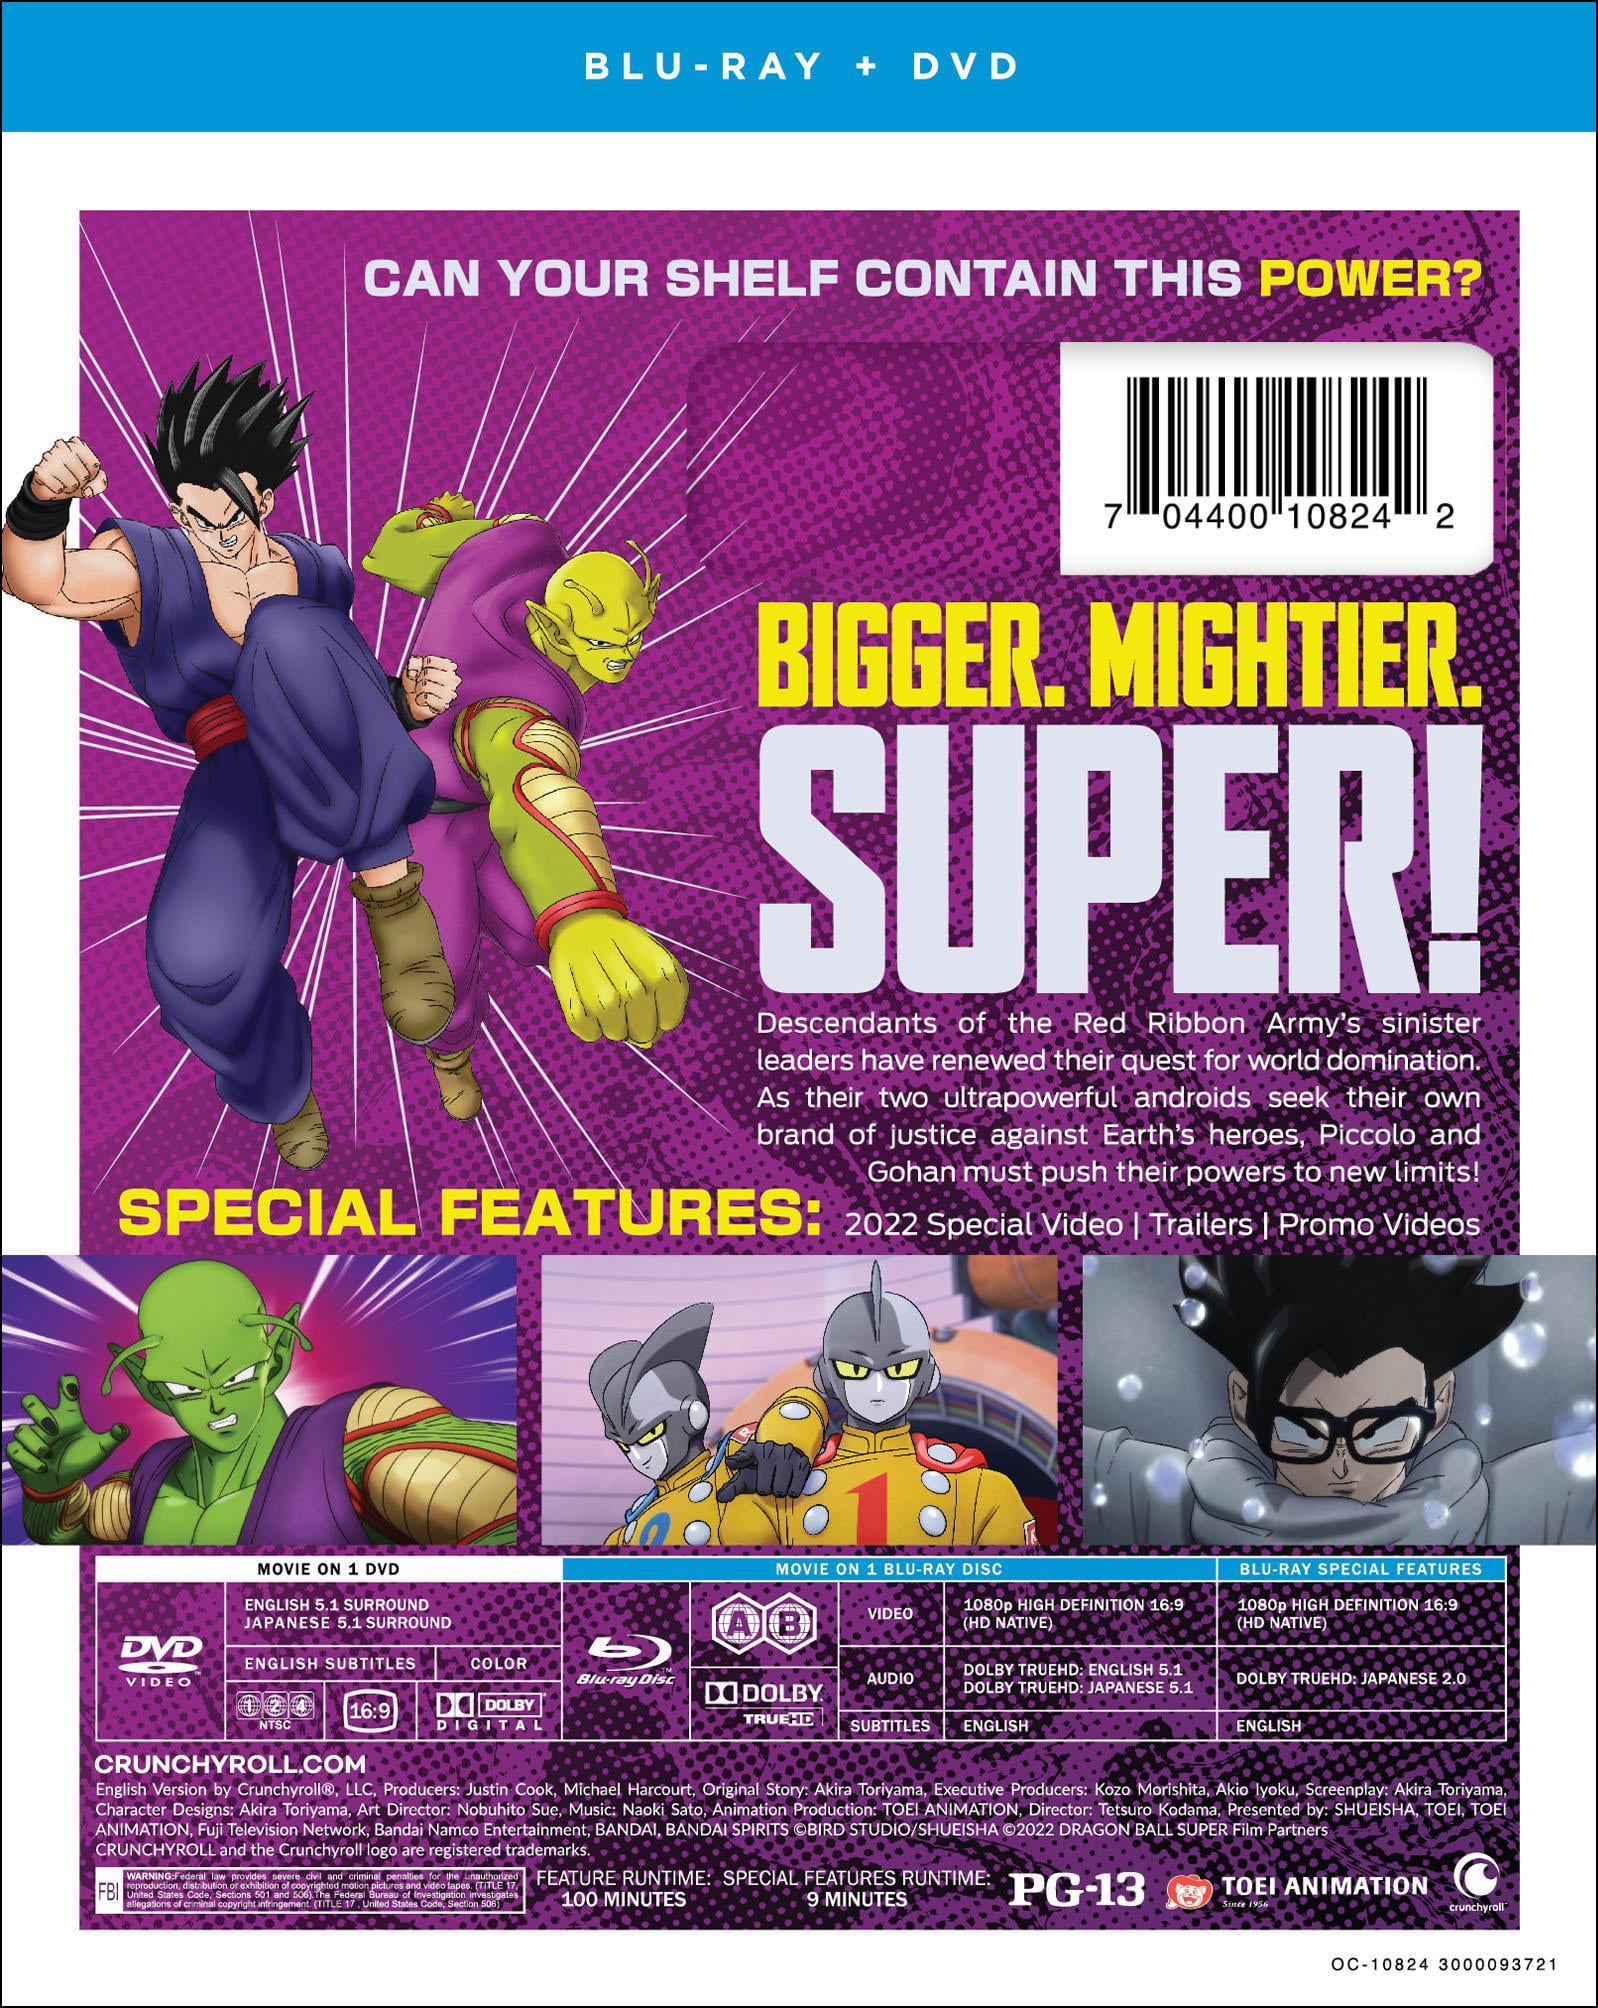 Dragon Ball Super: Super Hero (Blu-ray + DVD) 